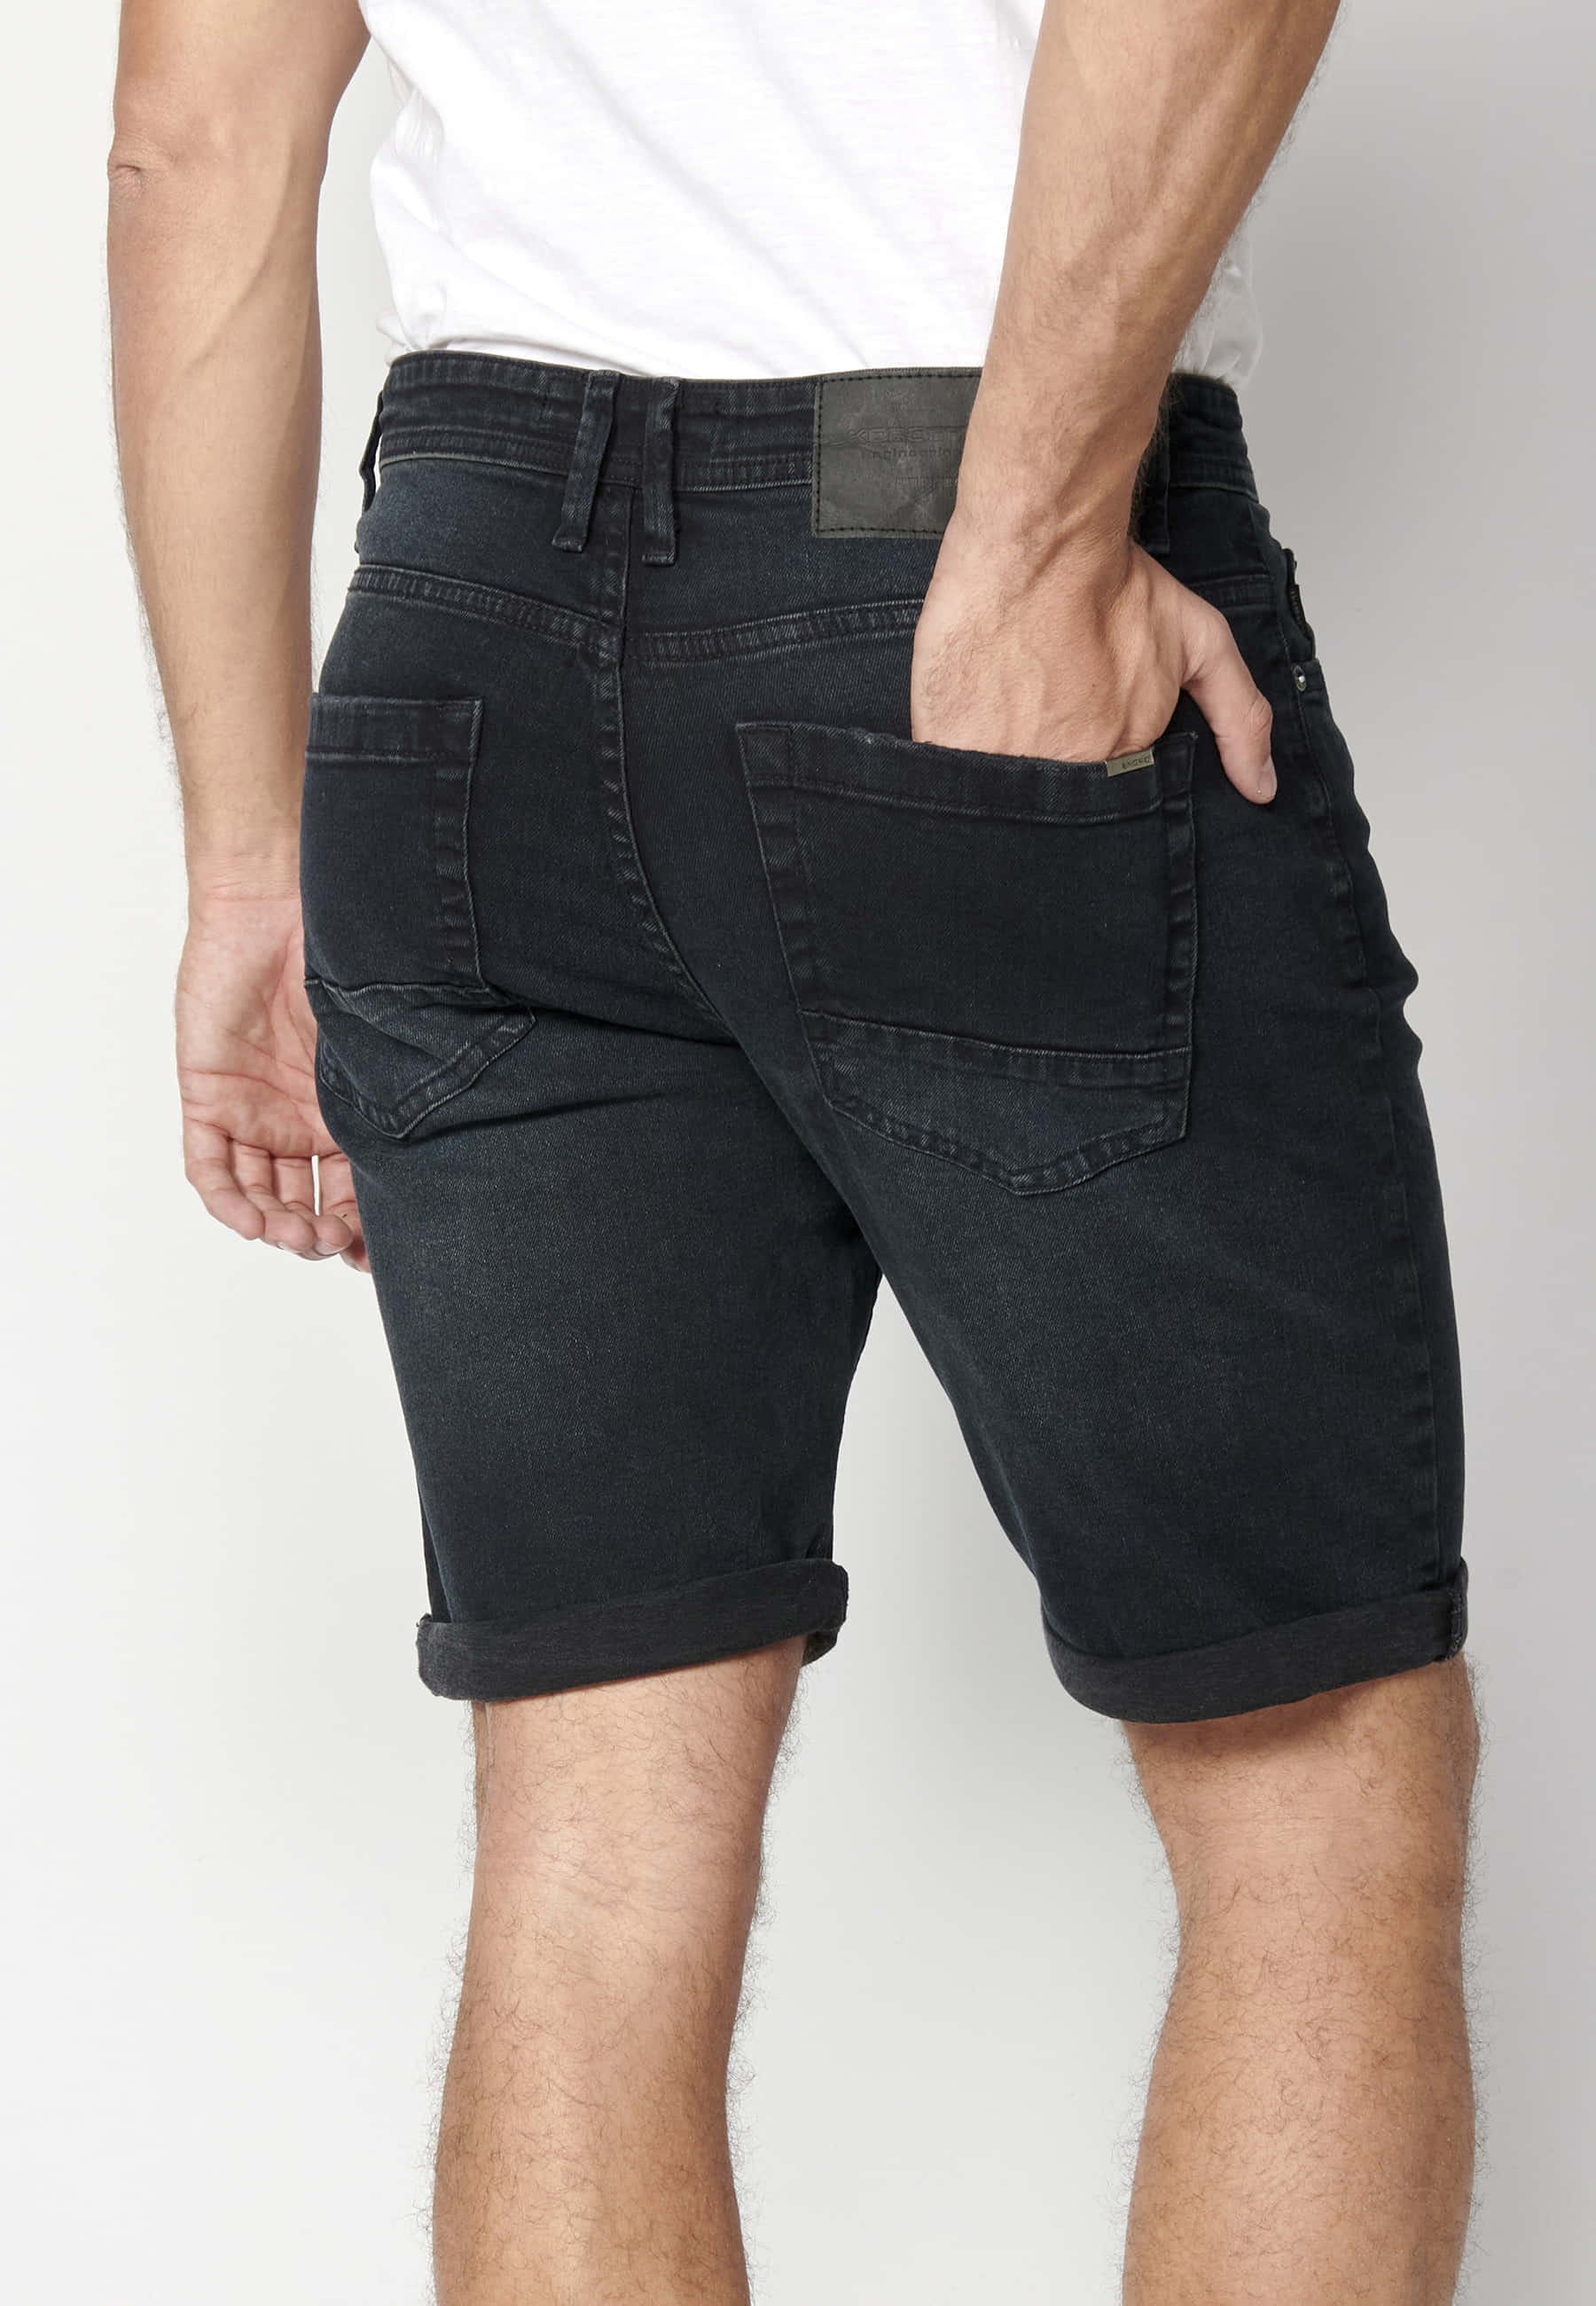 Dunkelblaue Bermuda-Shorts in normaler Passform für Herren